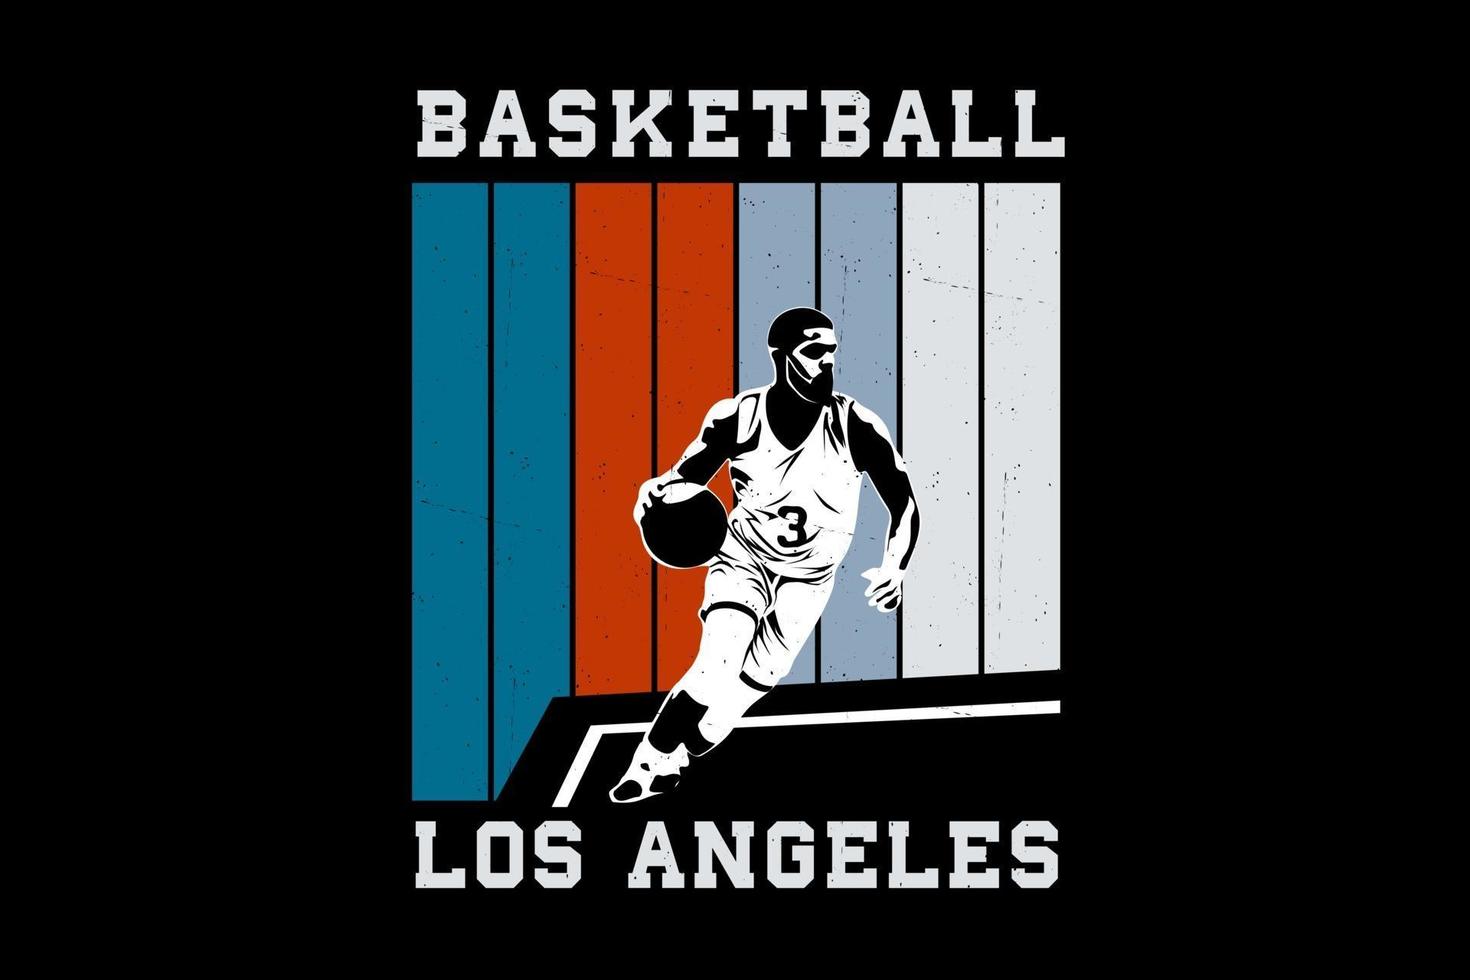 Basketball los angeles silhouette design vector